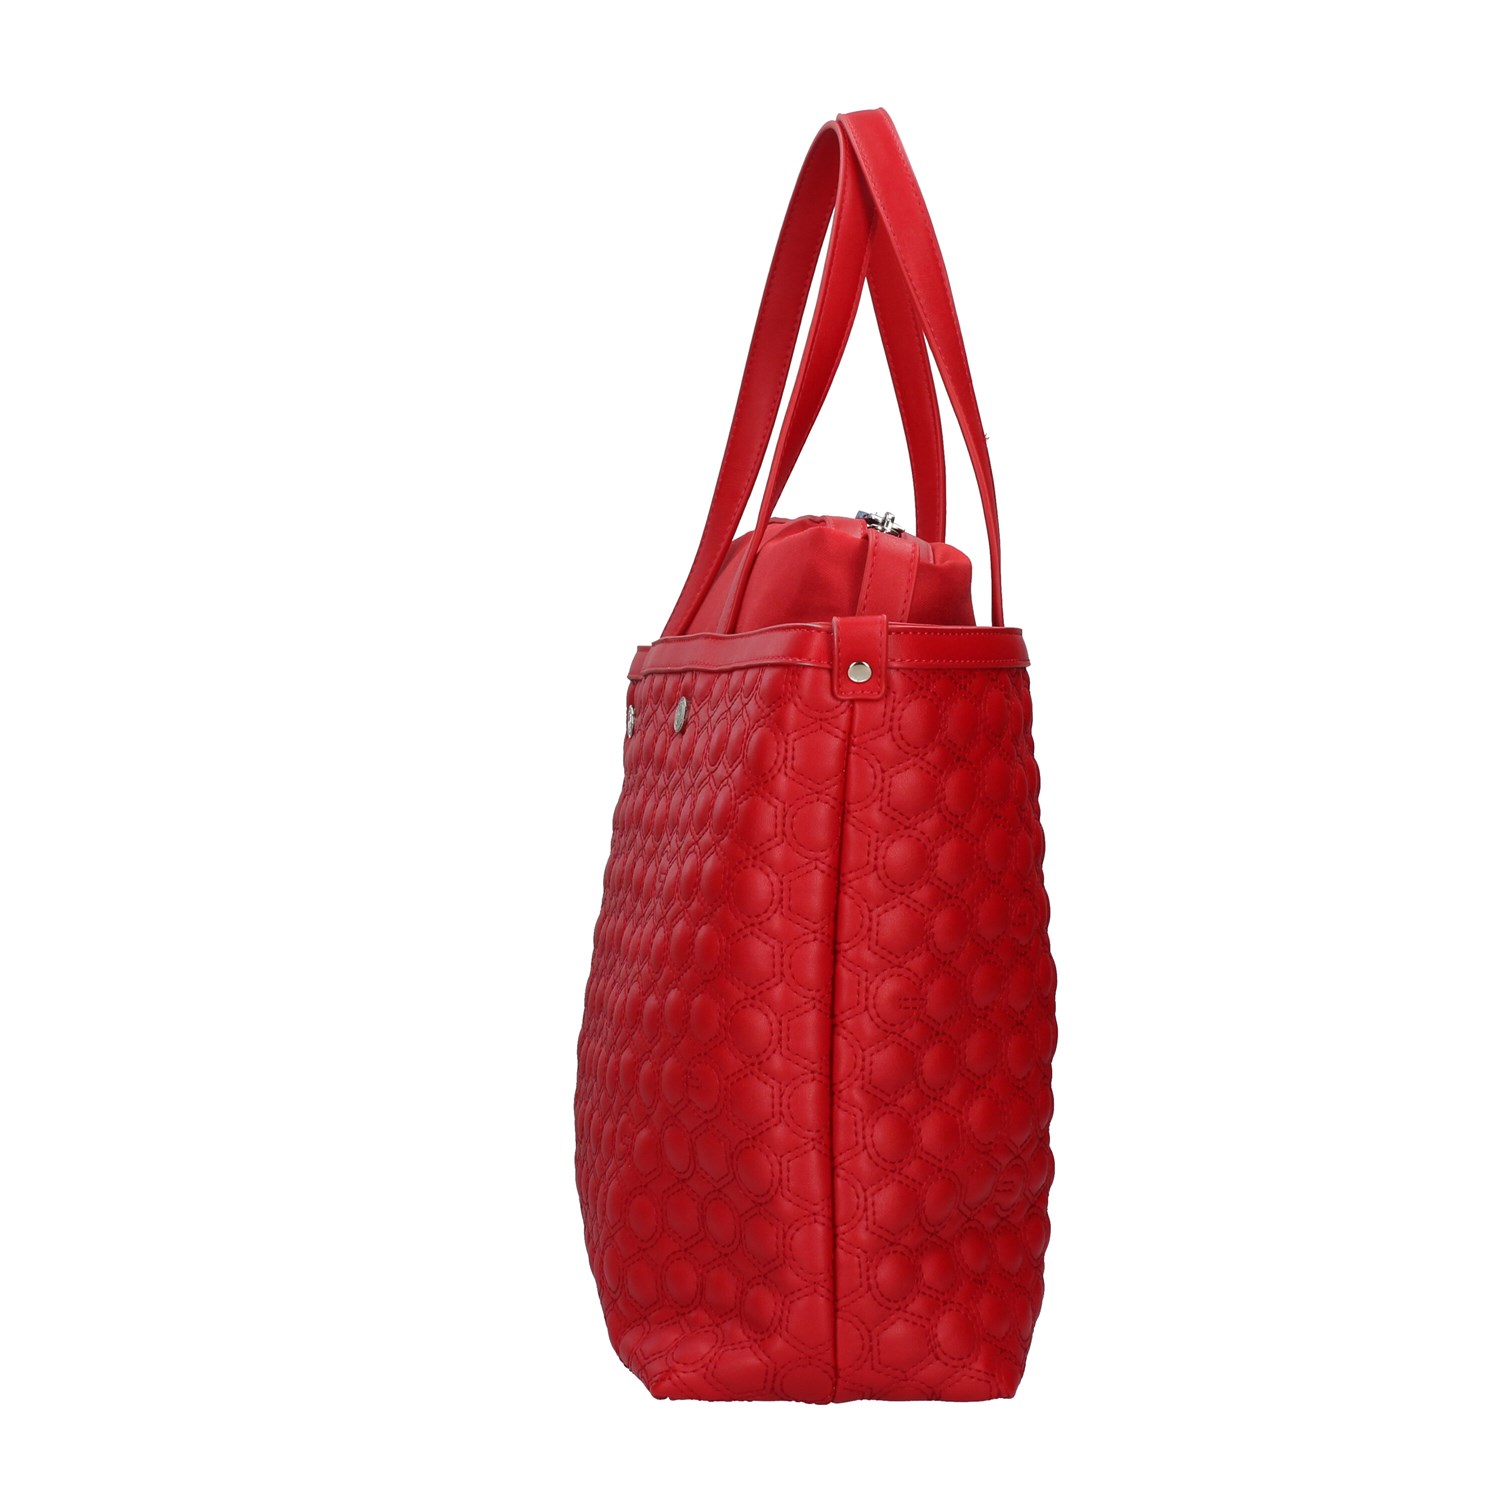 Gattinoni Roma Bags Accessories Shopping RED BENTK7879WV